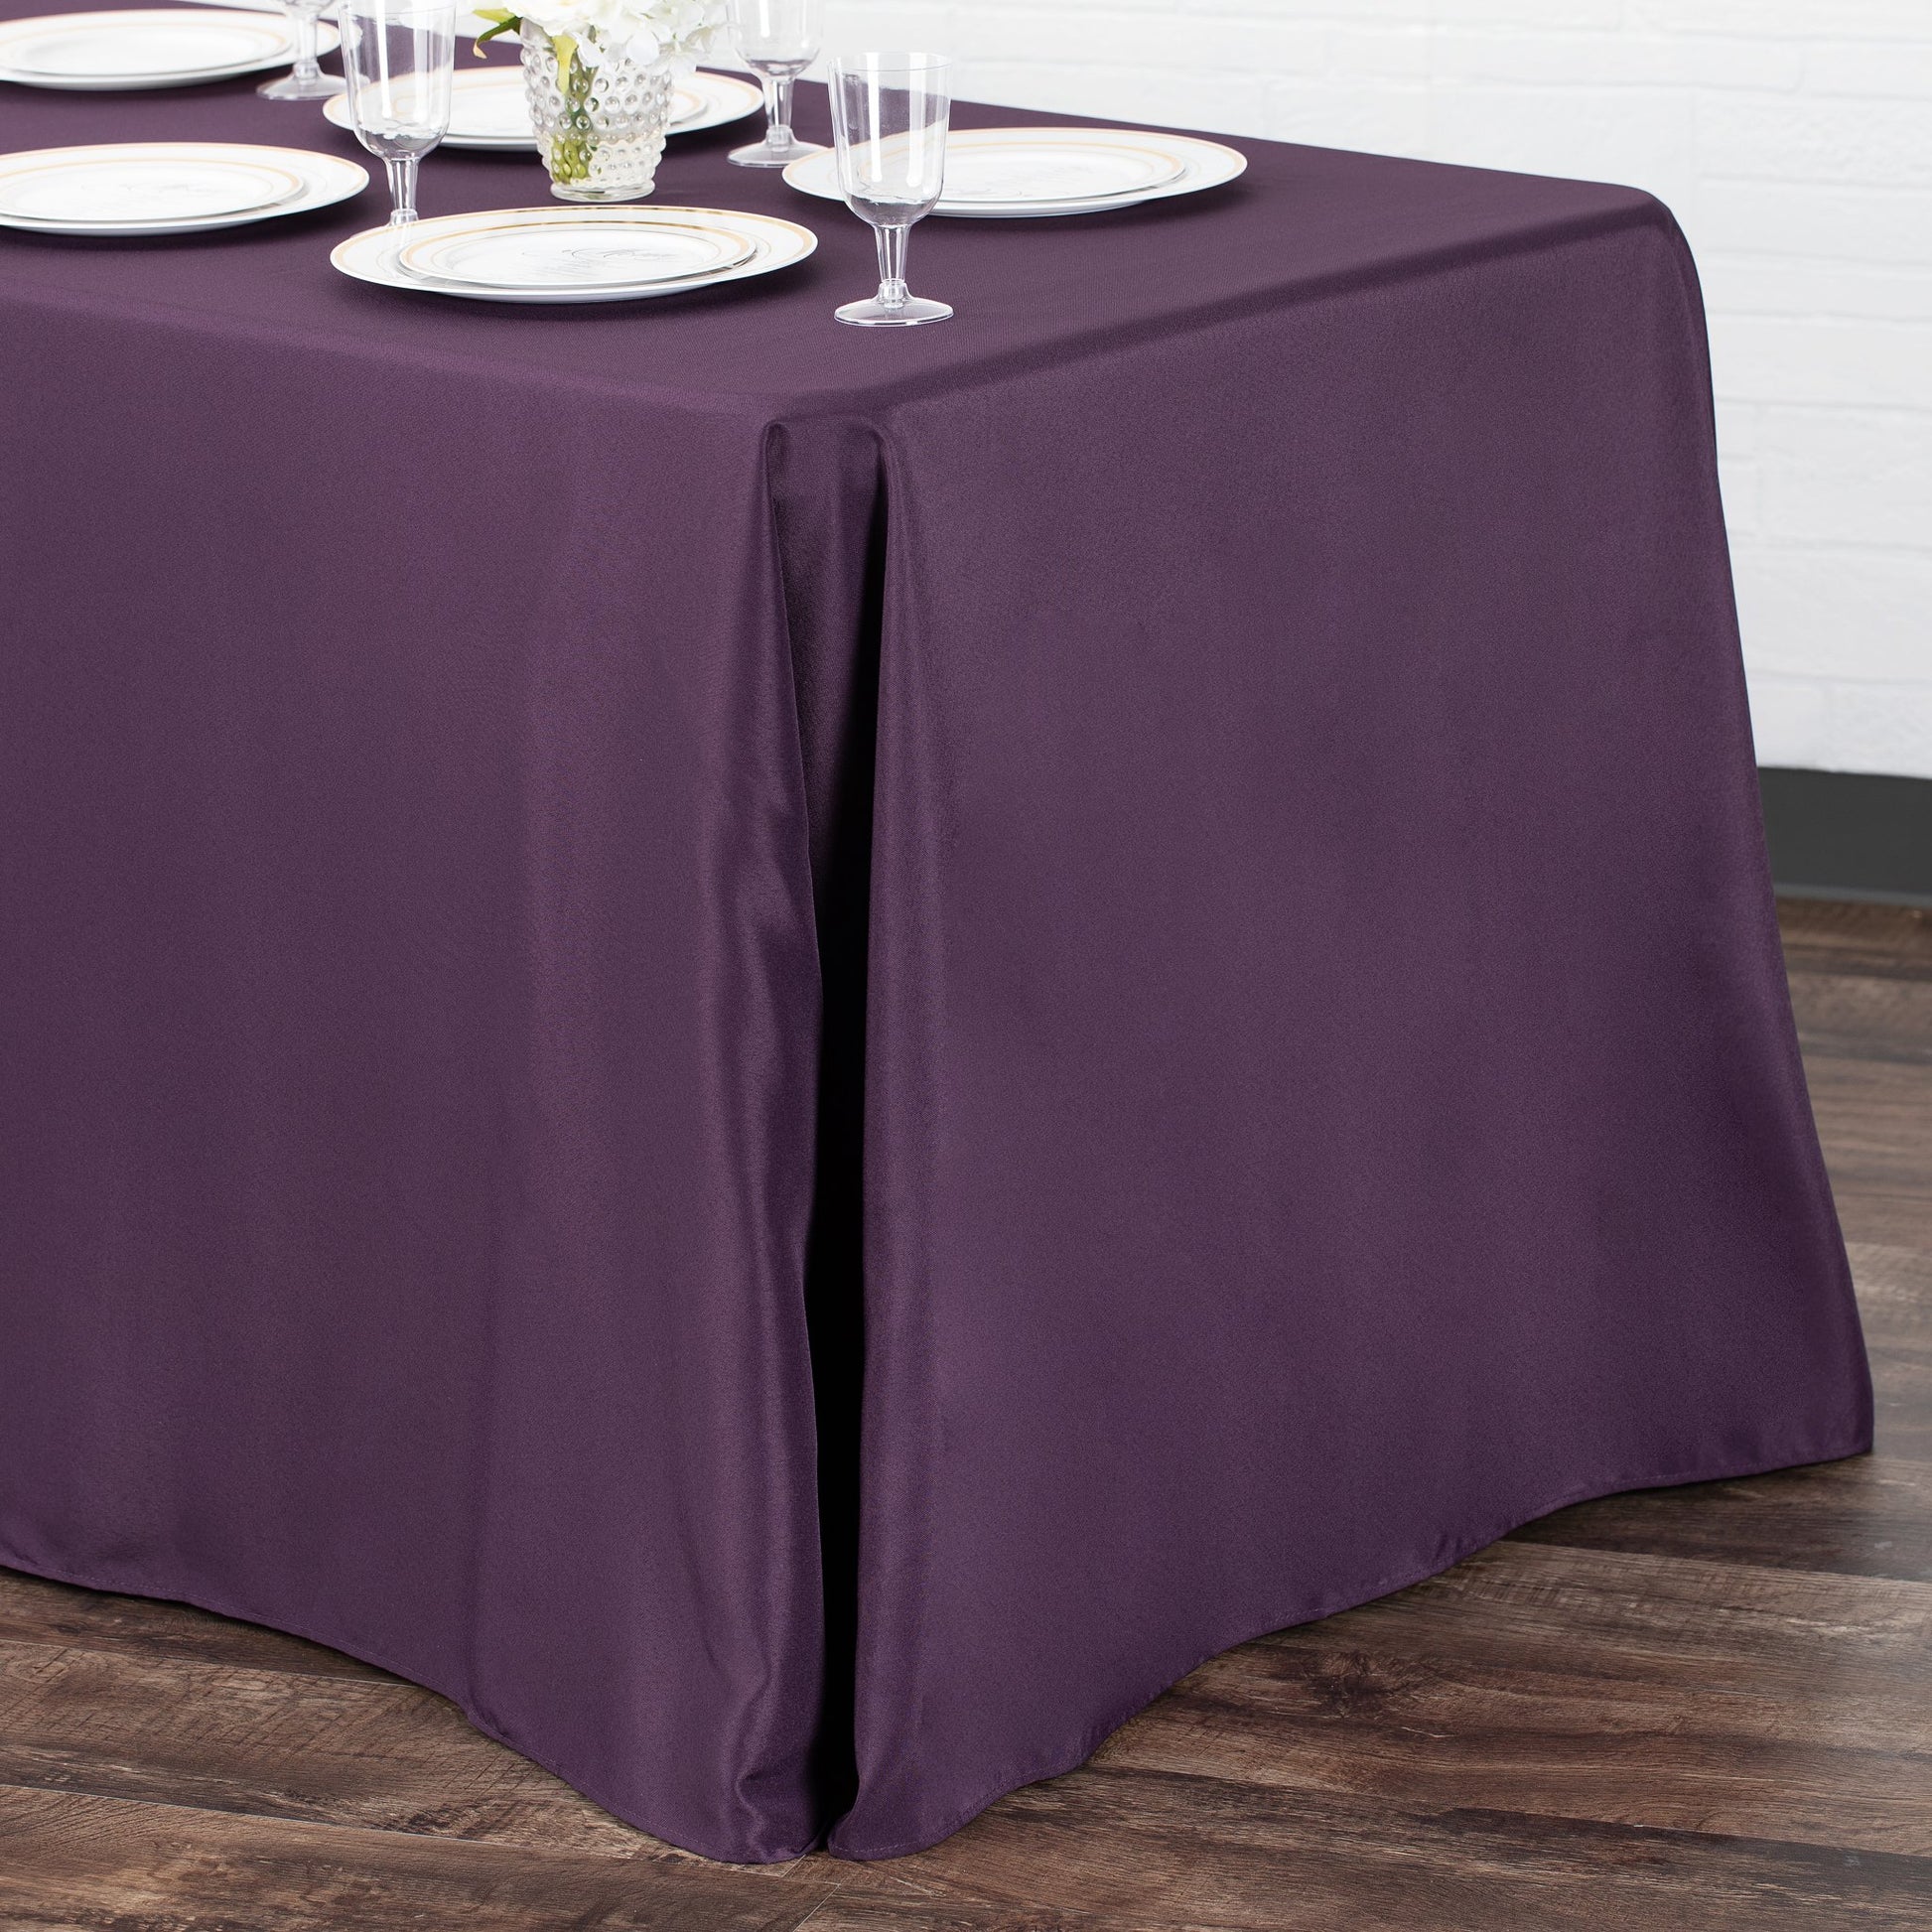 90"x156" Rectangular Oblong Polyester Tablecloth - Eggplant/Plum - CV Linens